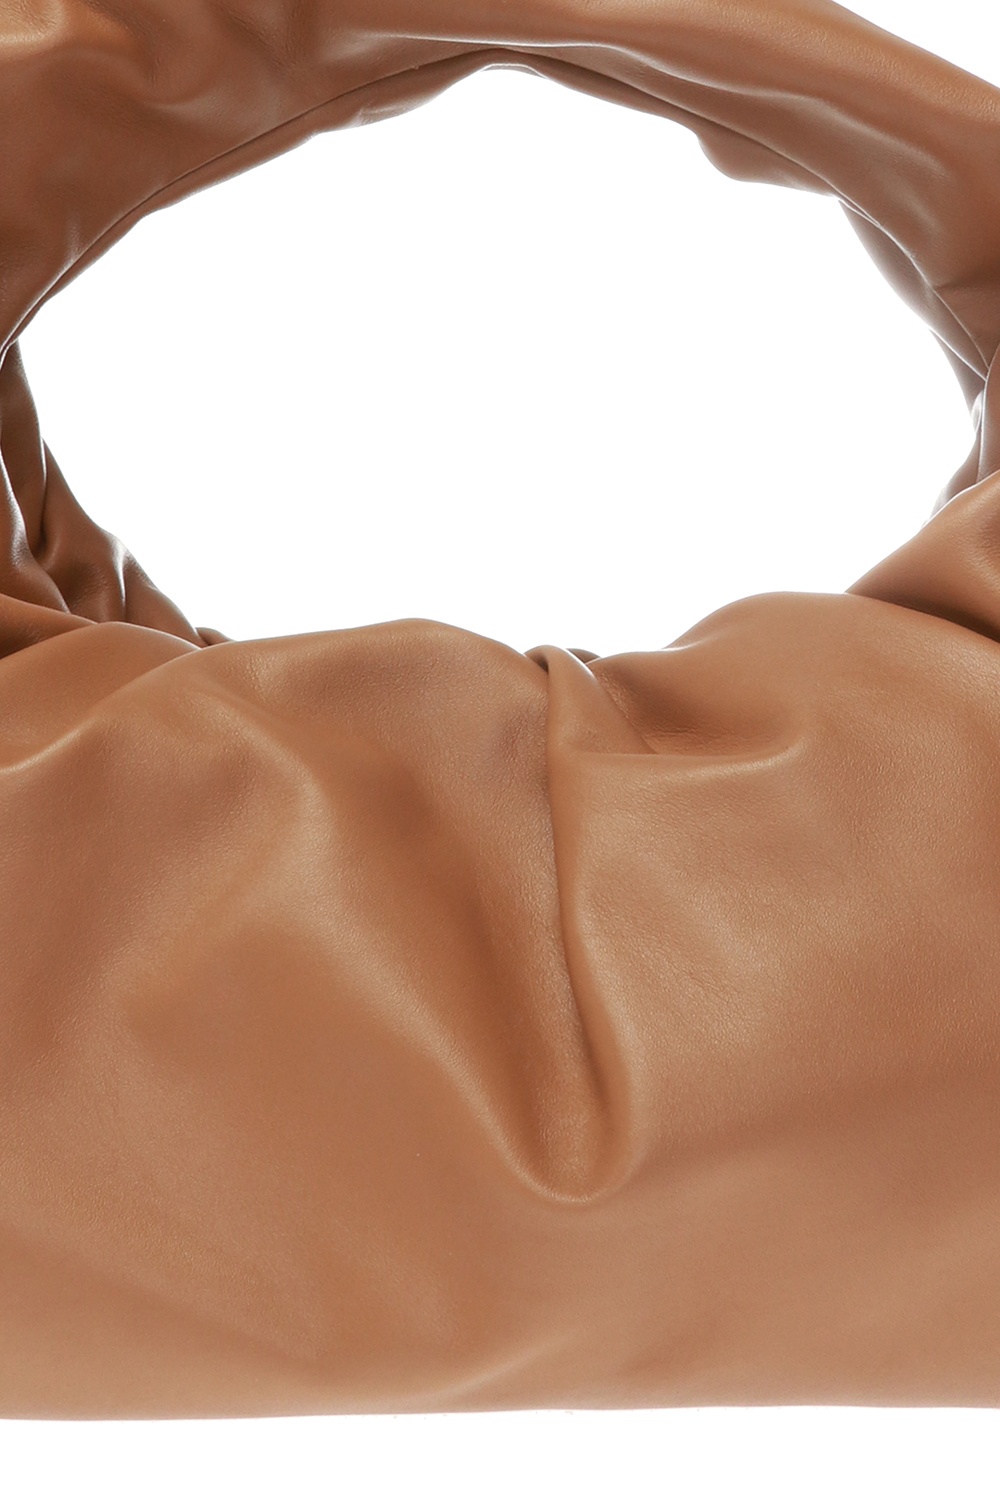 BOTTEGA VENETA: The Shoulder Pouch leather bag - Dark  Bottega Veneta  shoulder bag 610524 VCP40 online at